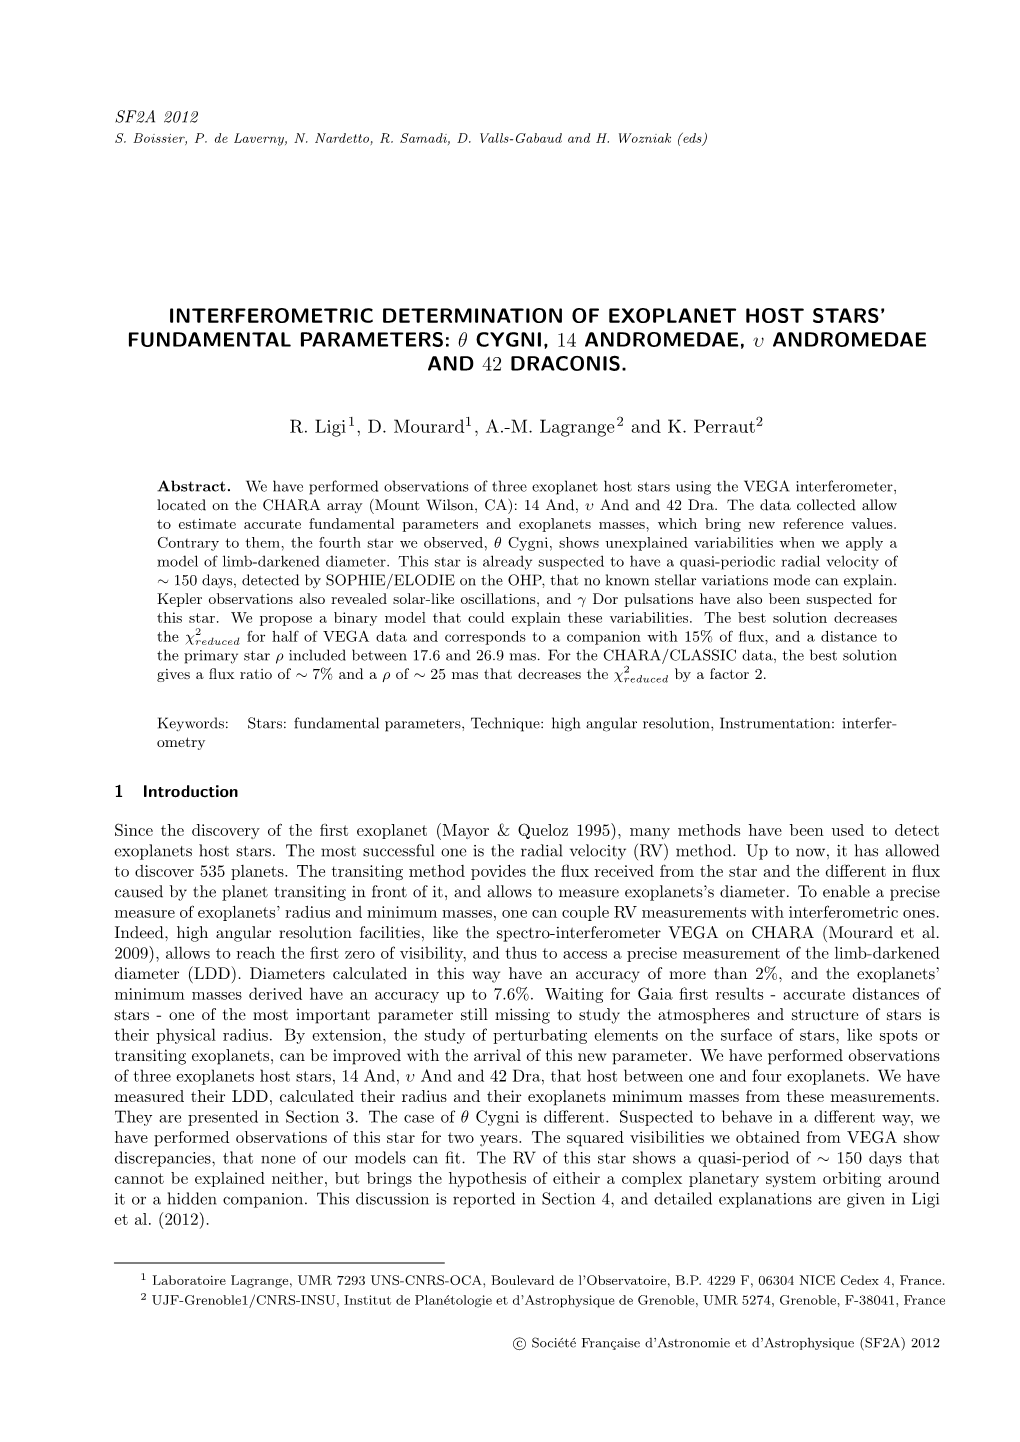 Interferometric Determination of Exoplanet Host Stars’ Fundamental Parameters: Θ Cygni, 14 Andromedae, Υ Andromedae and 42 Draconis